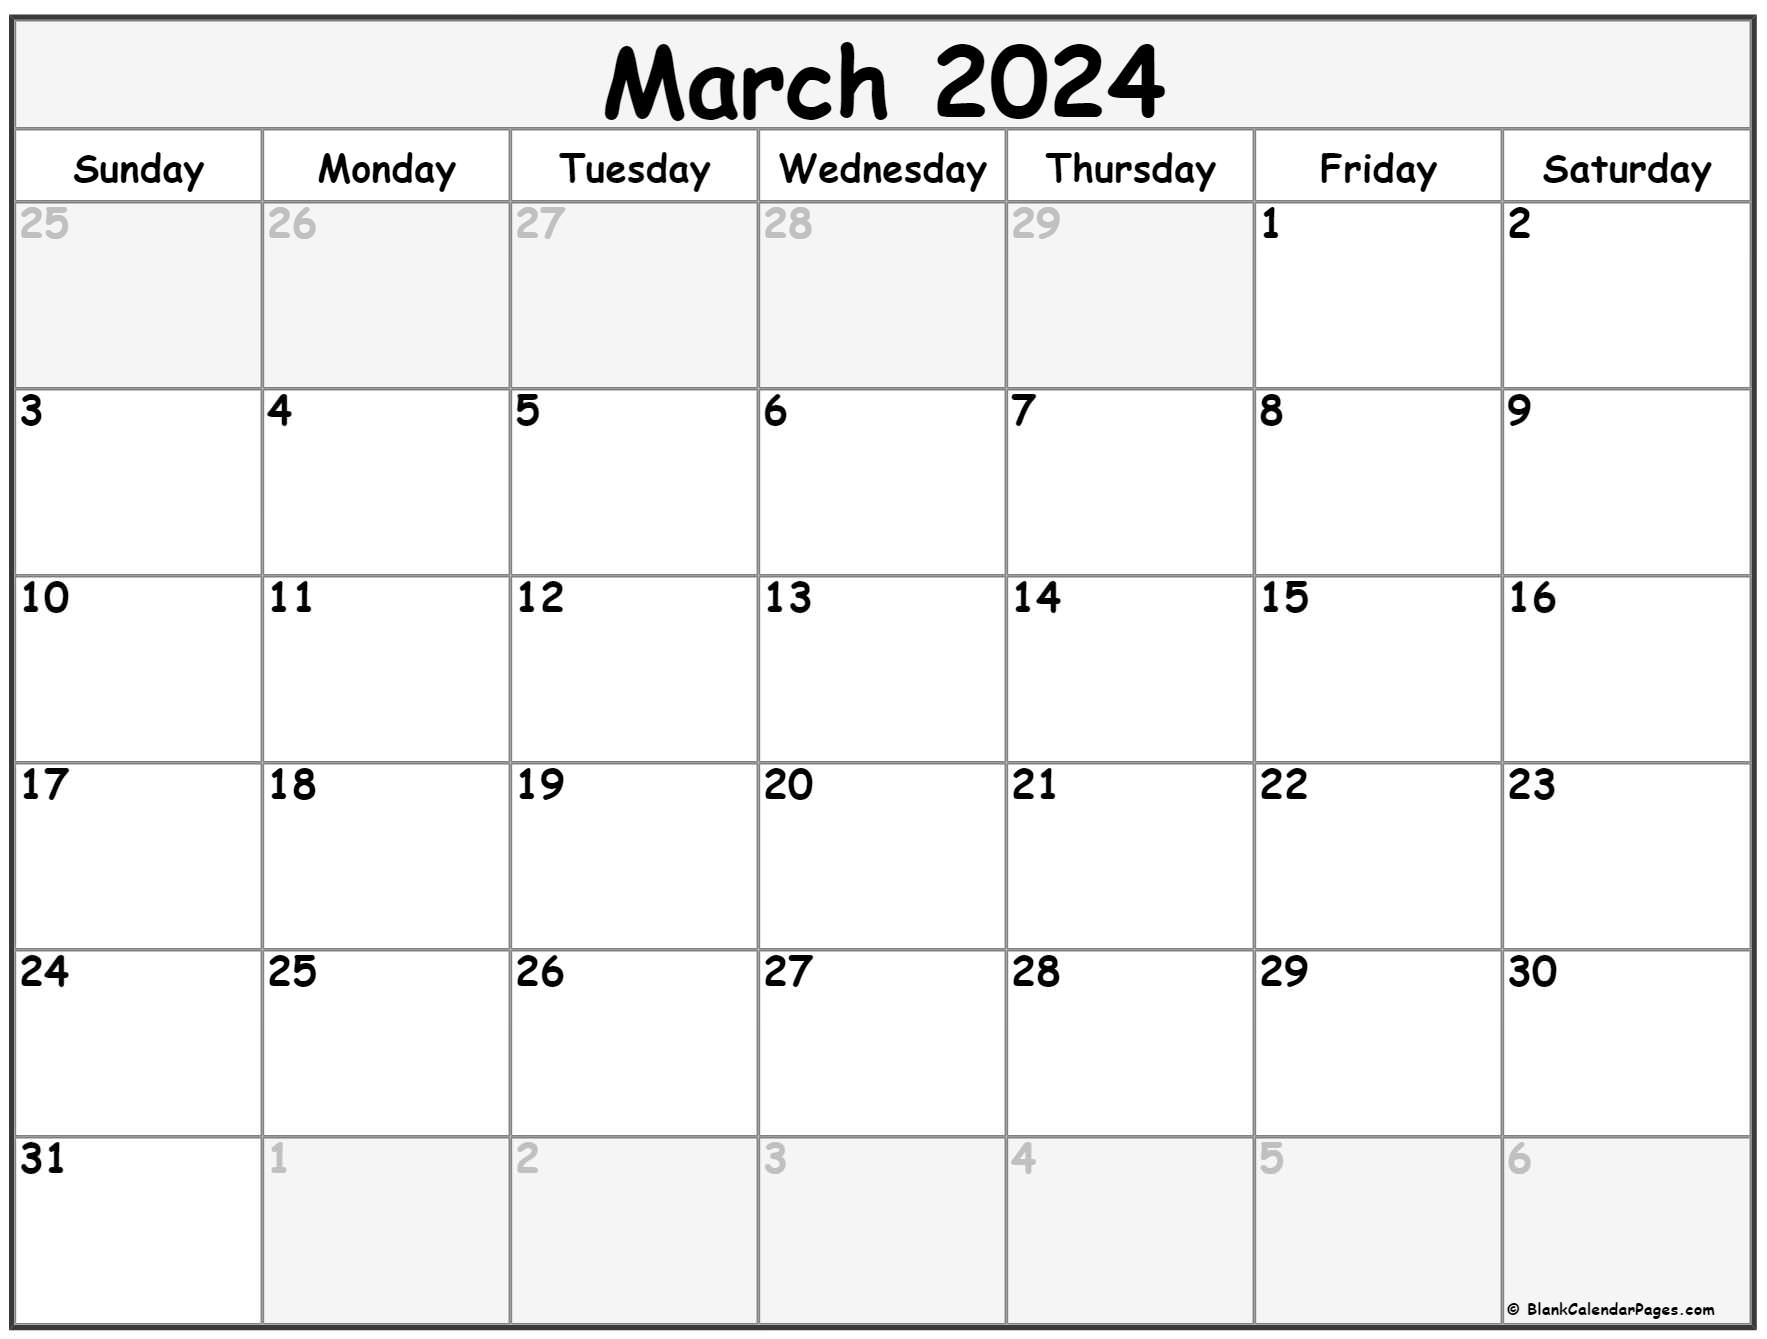 calendar-march-2024-442ms-michel-zbinden-gy